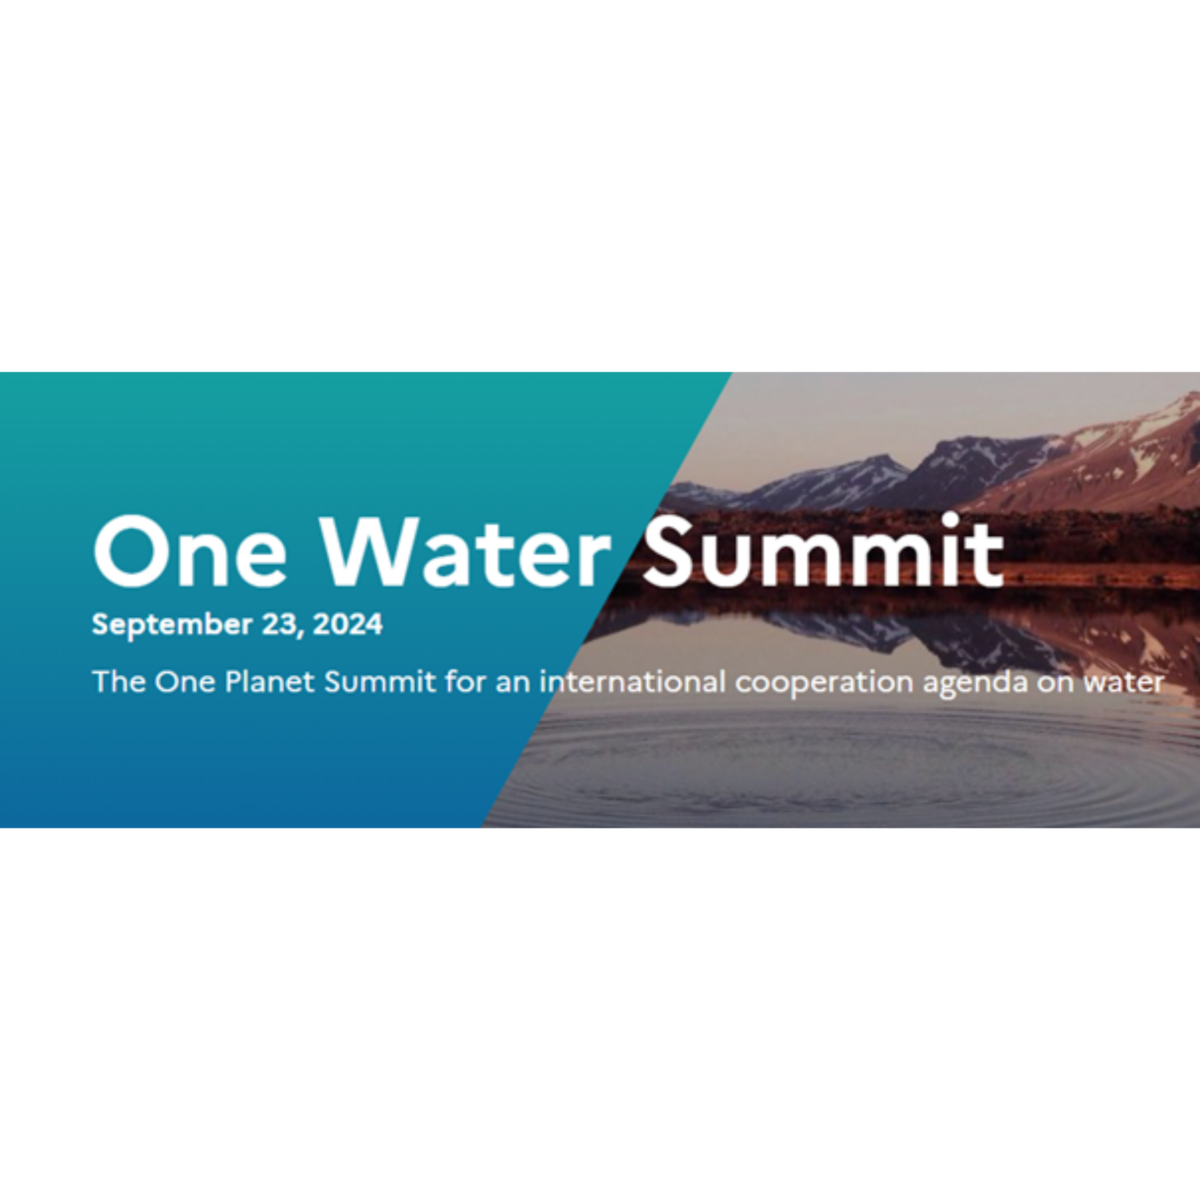 One Water Summit